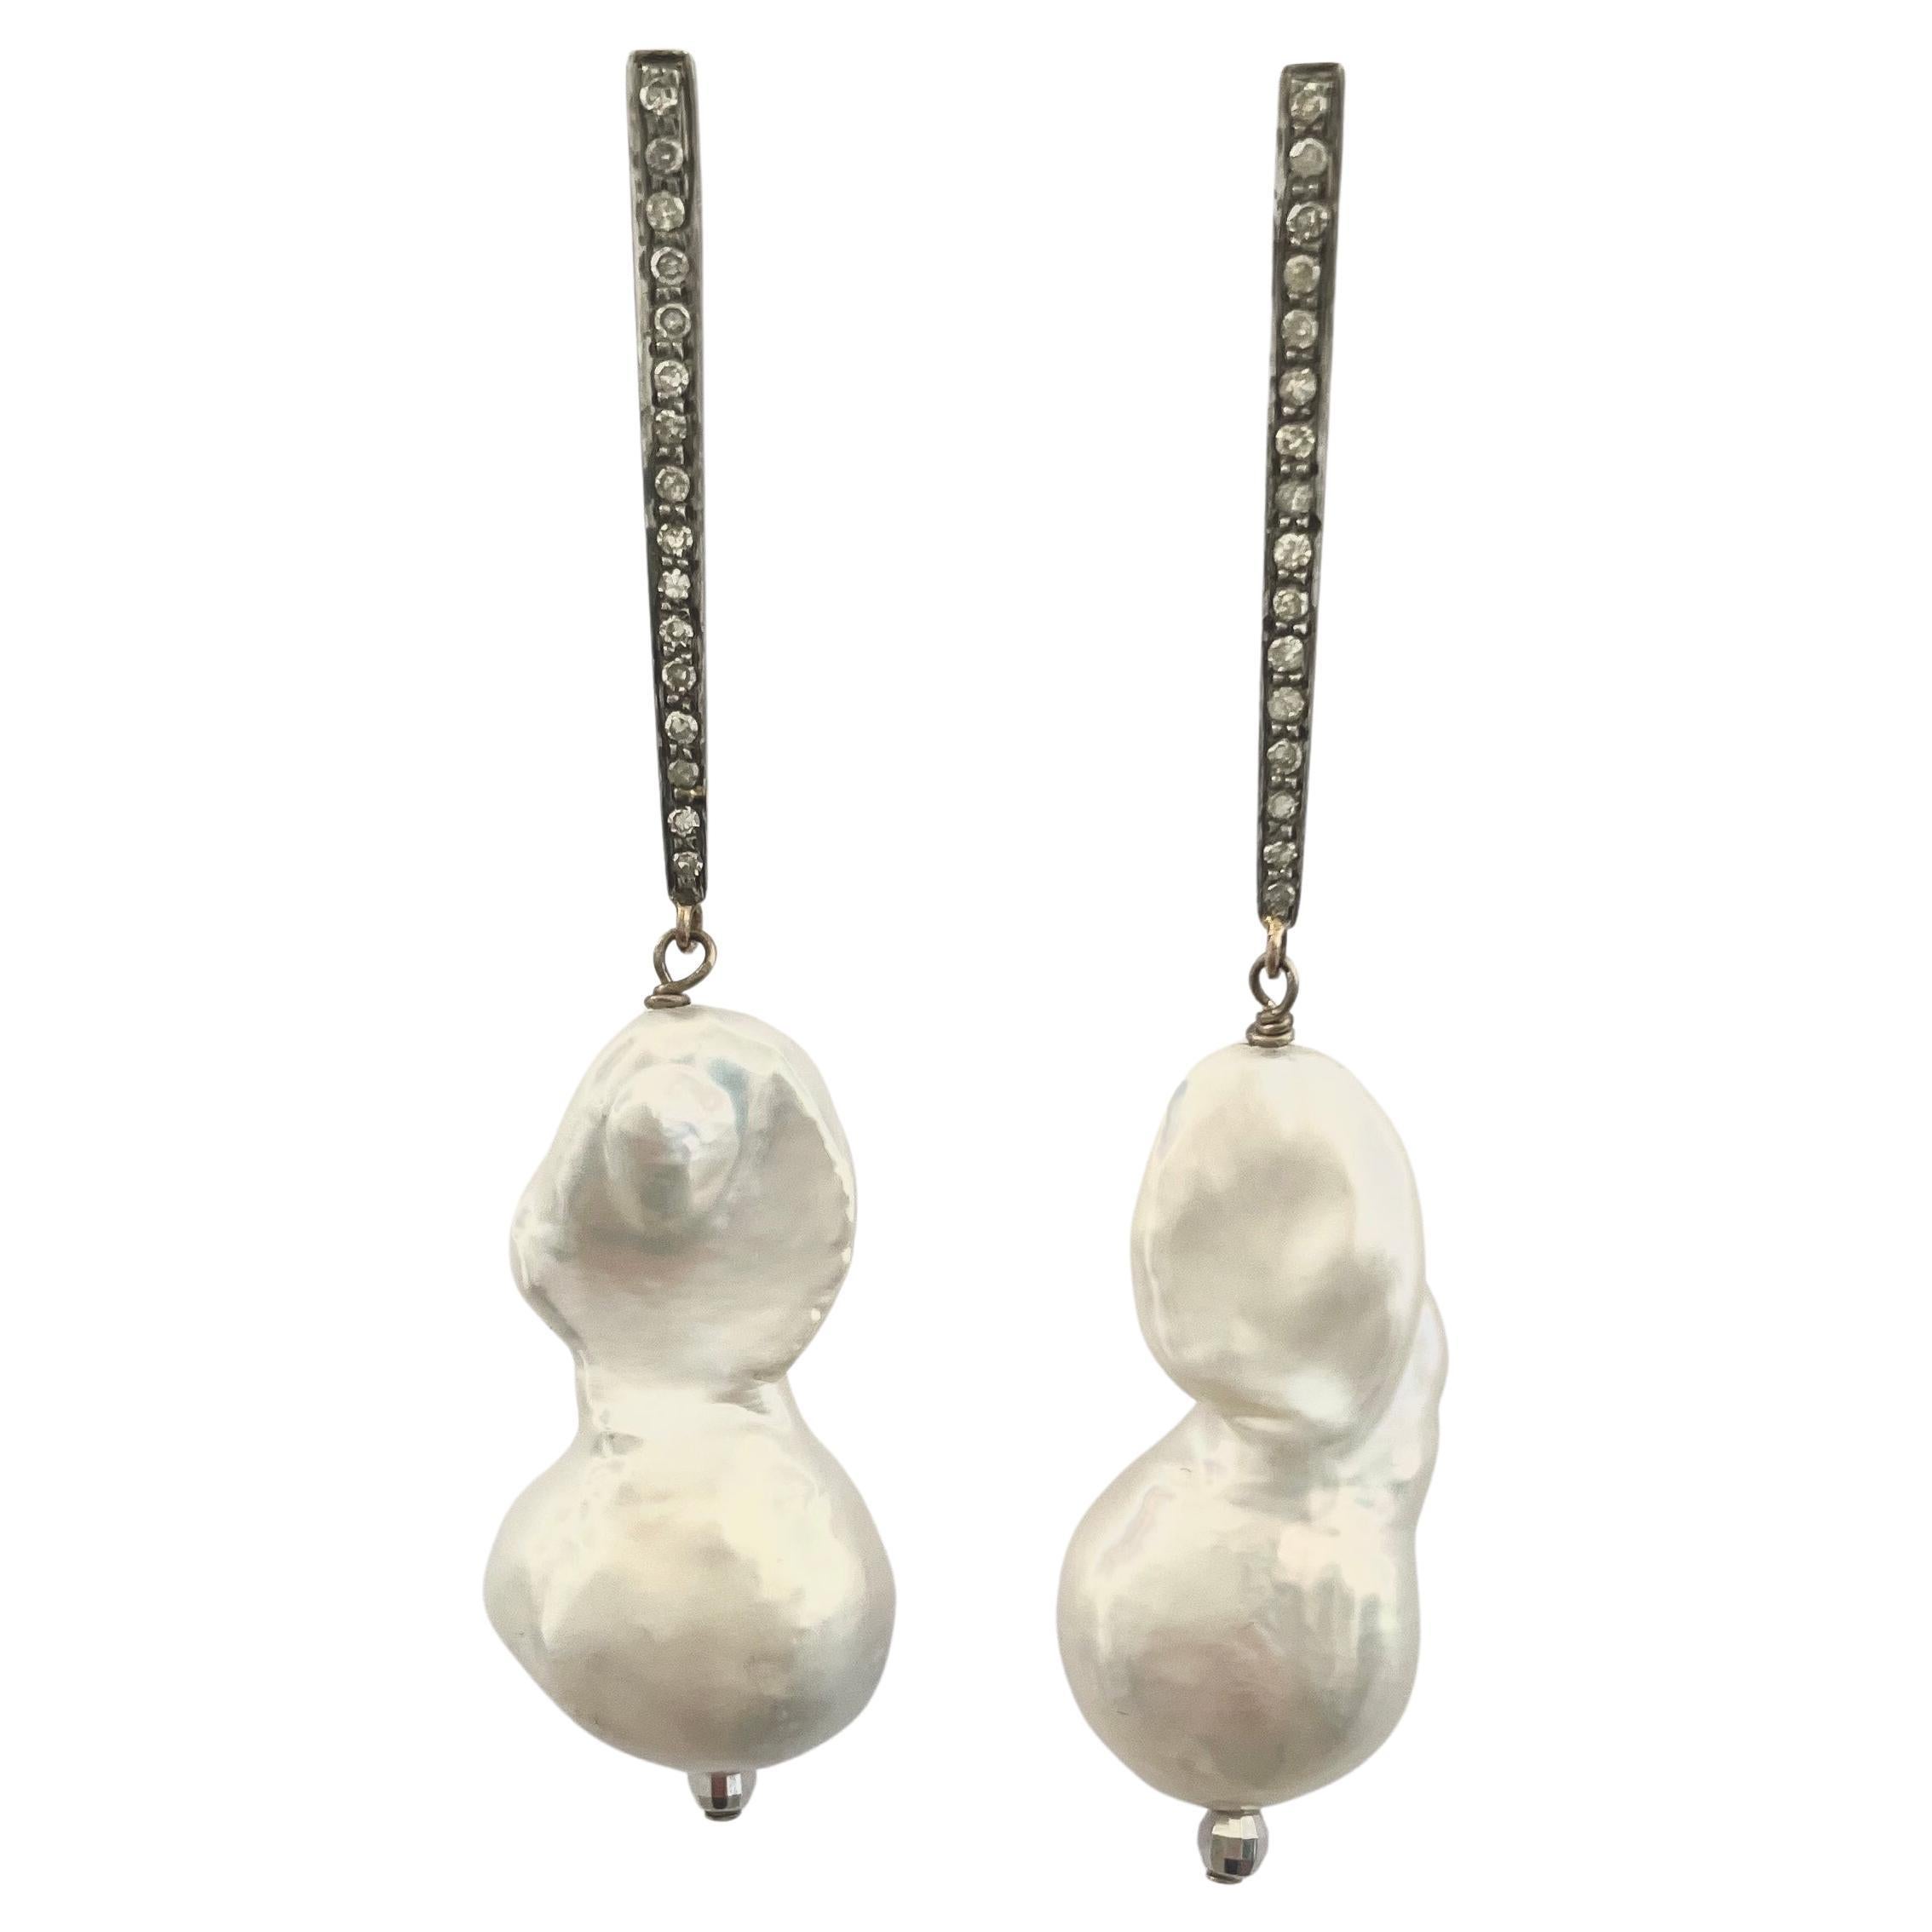 Freshwater Pearl with Diamonds Earrings